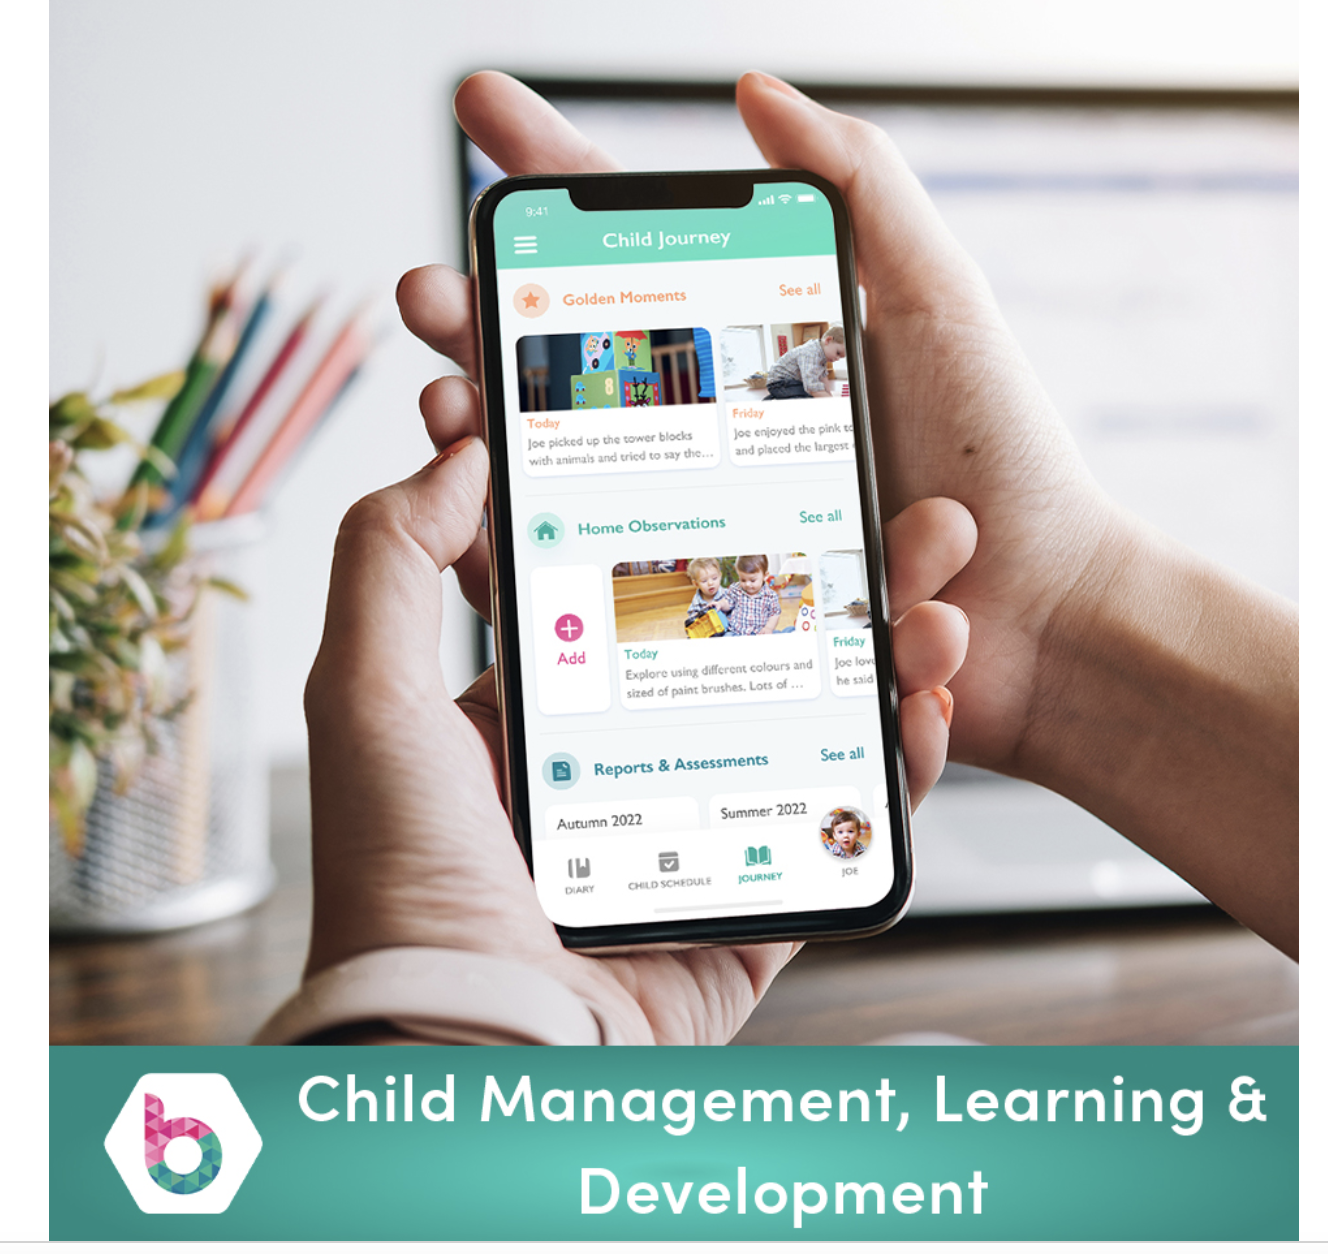 Child Management & Learning & Development